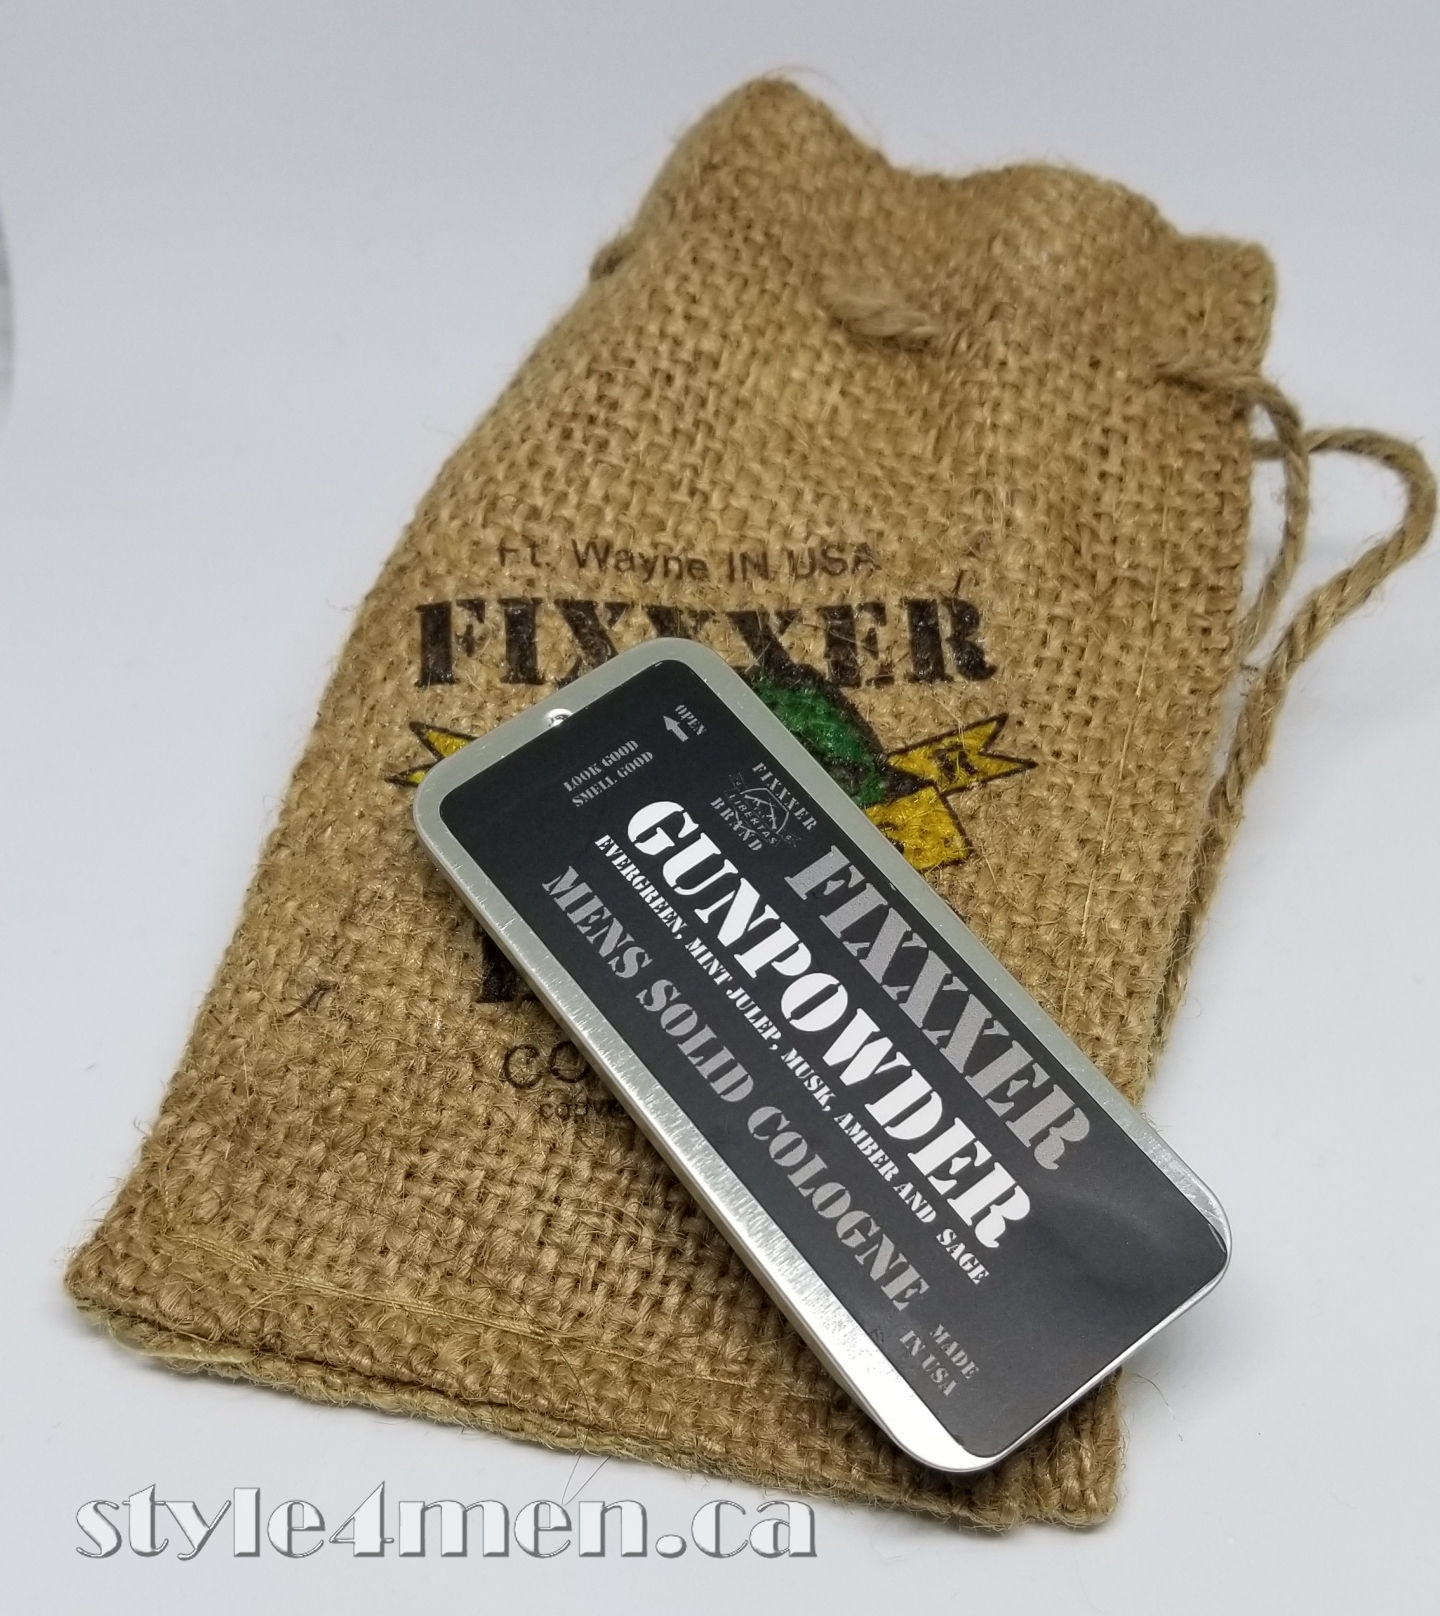 GUNPOWDER Solid Cologne by Fixxxer – A Surprise!